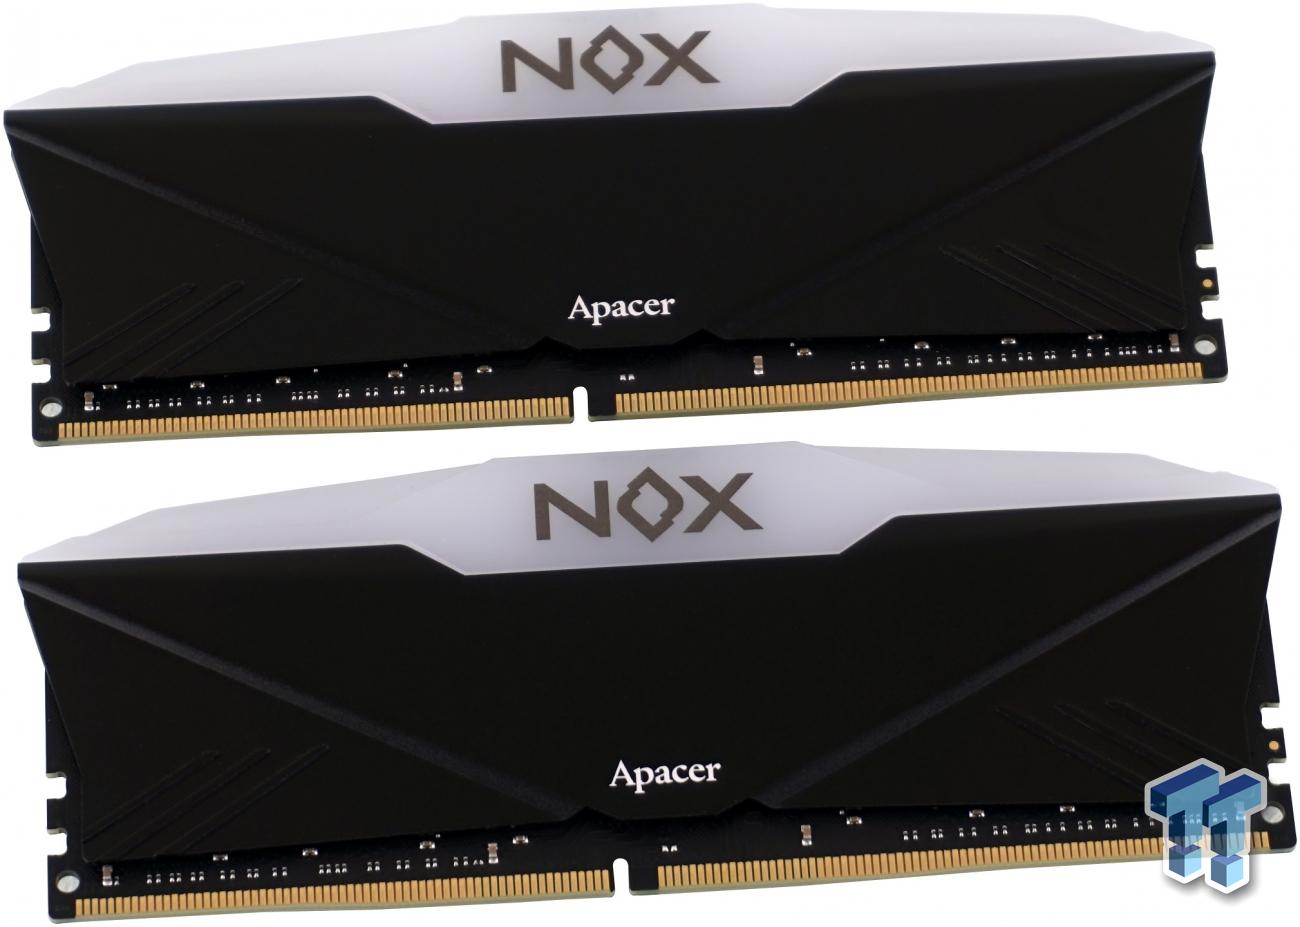 Apacer NOX RGB DDR43200 32GB Memory Kit Review